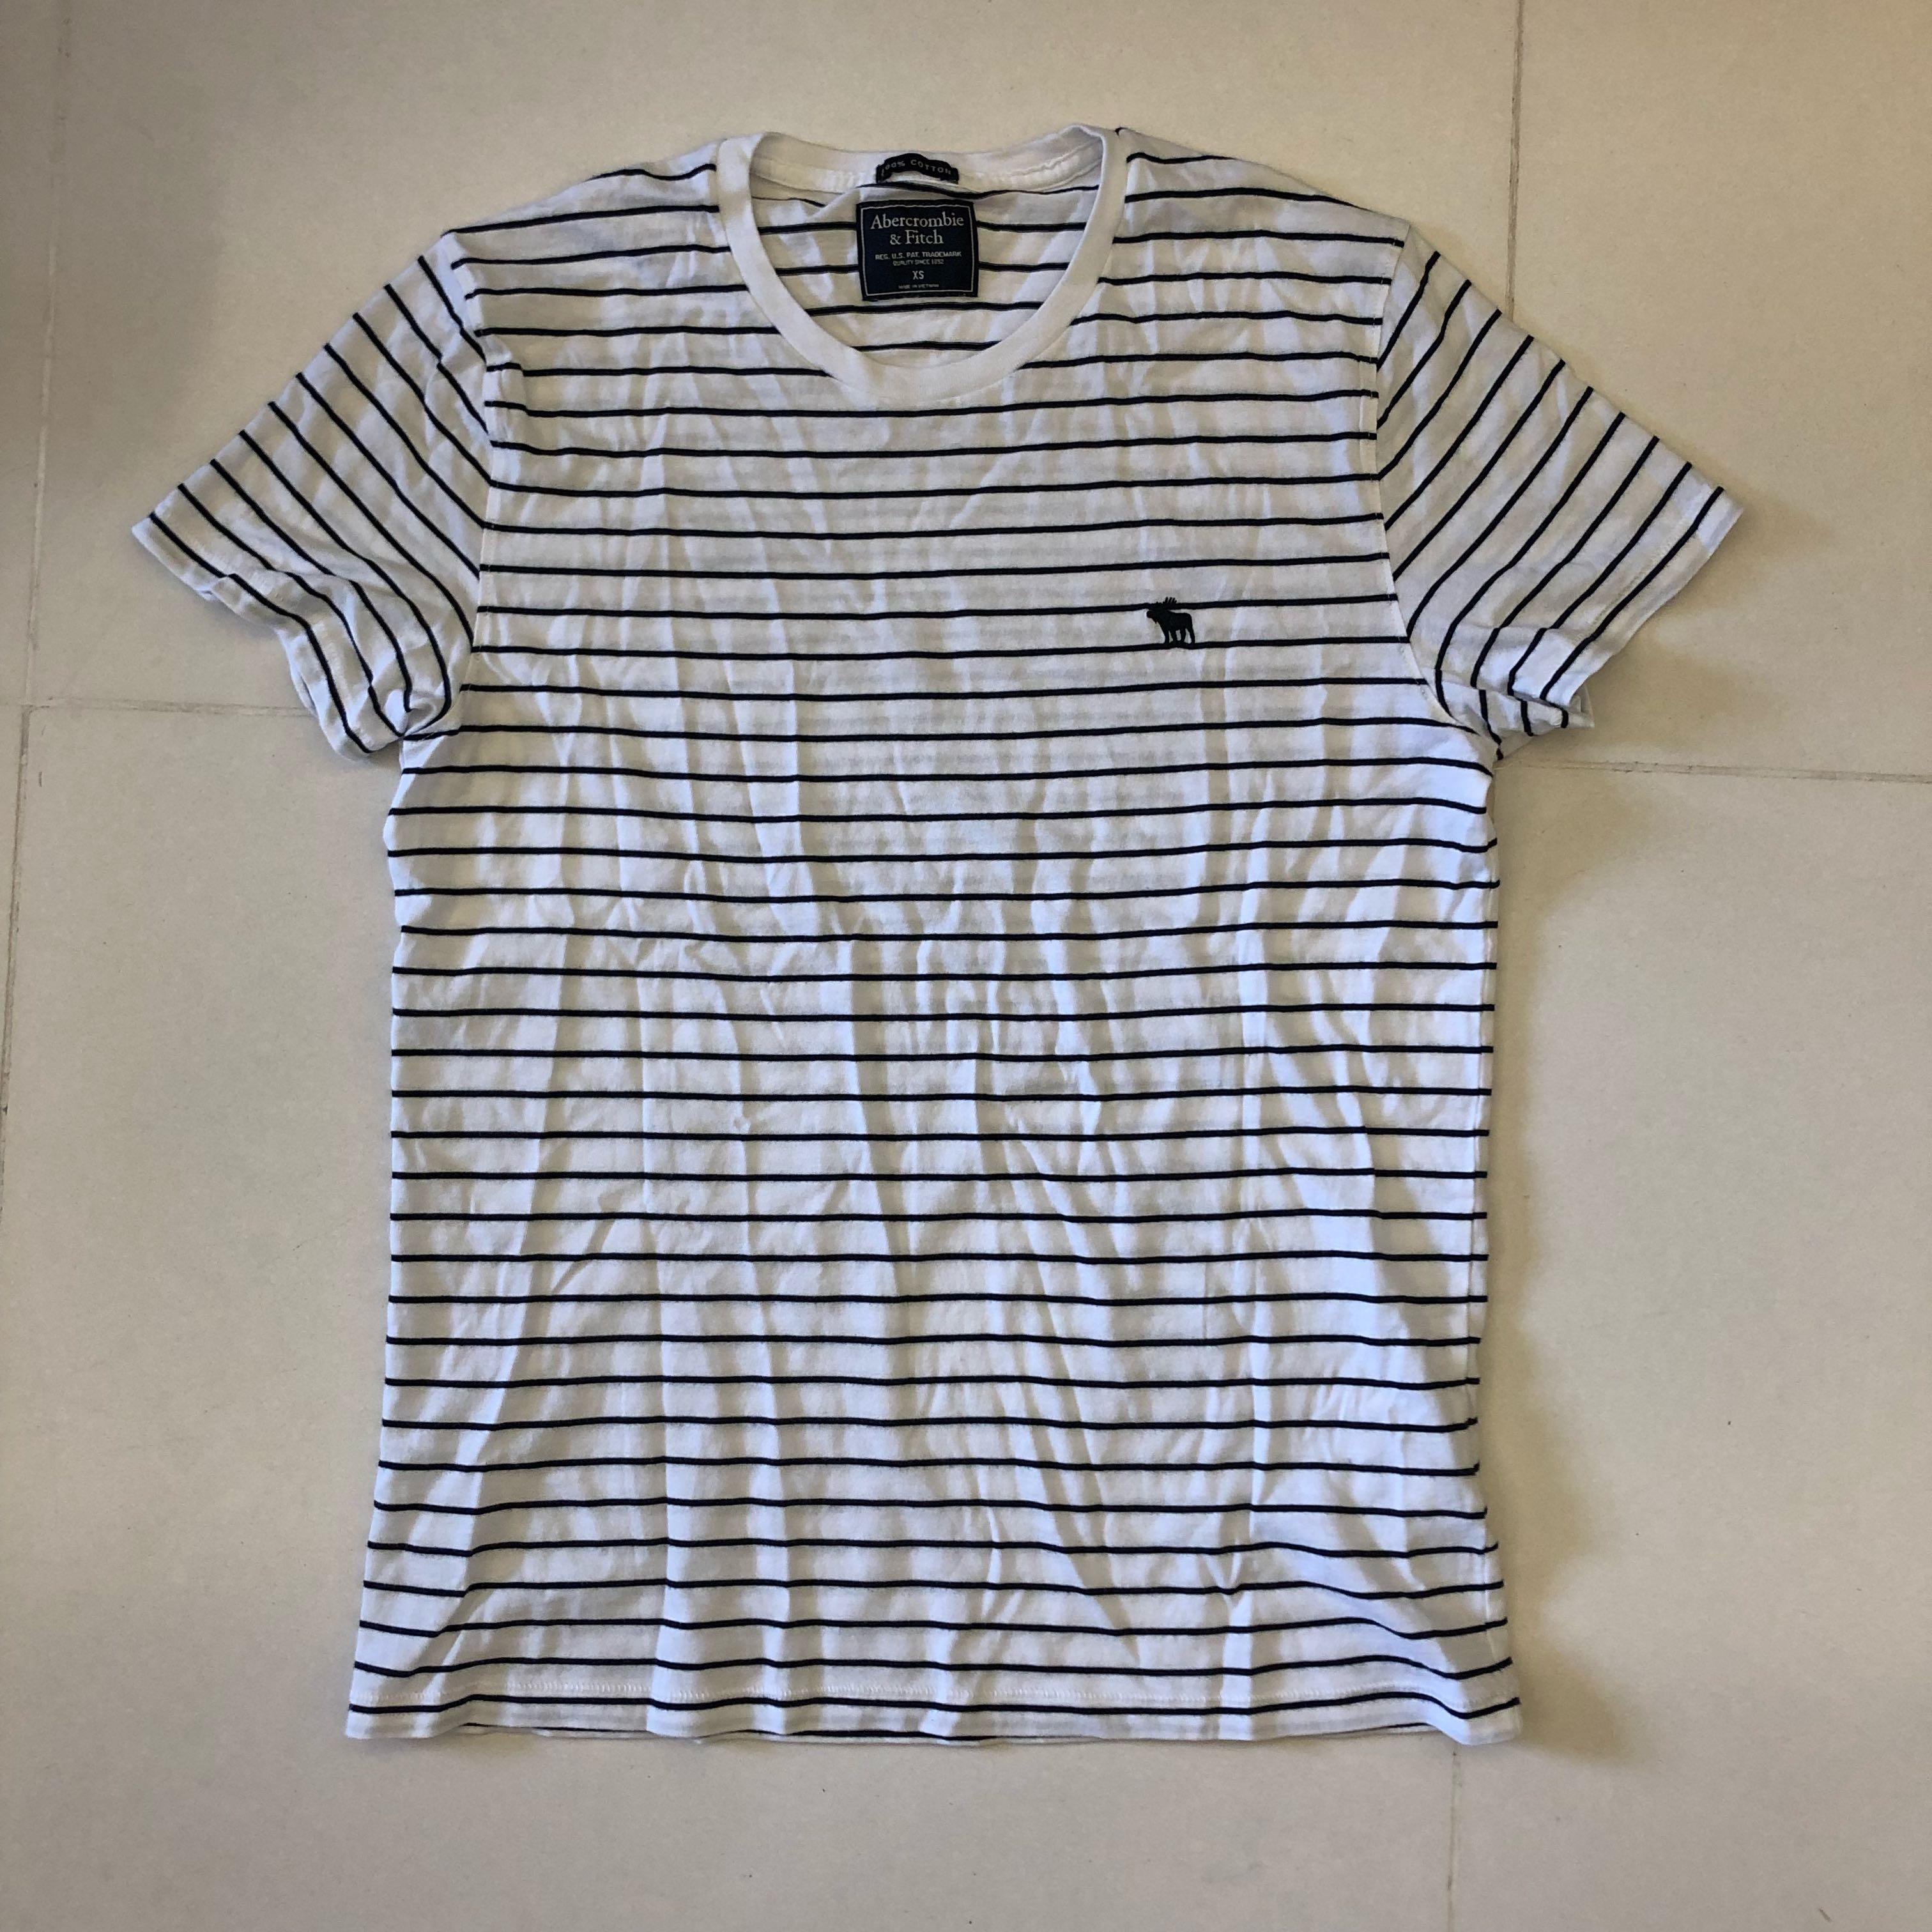 Abercrombie \u0026 Fitch striped shirt 